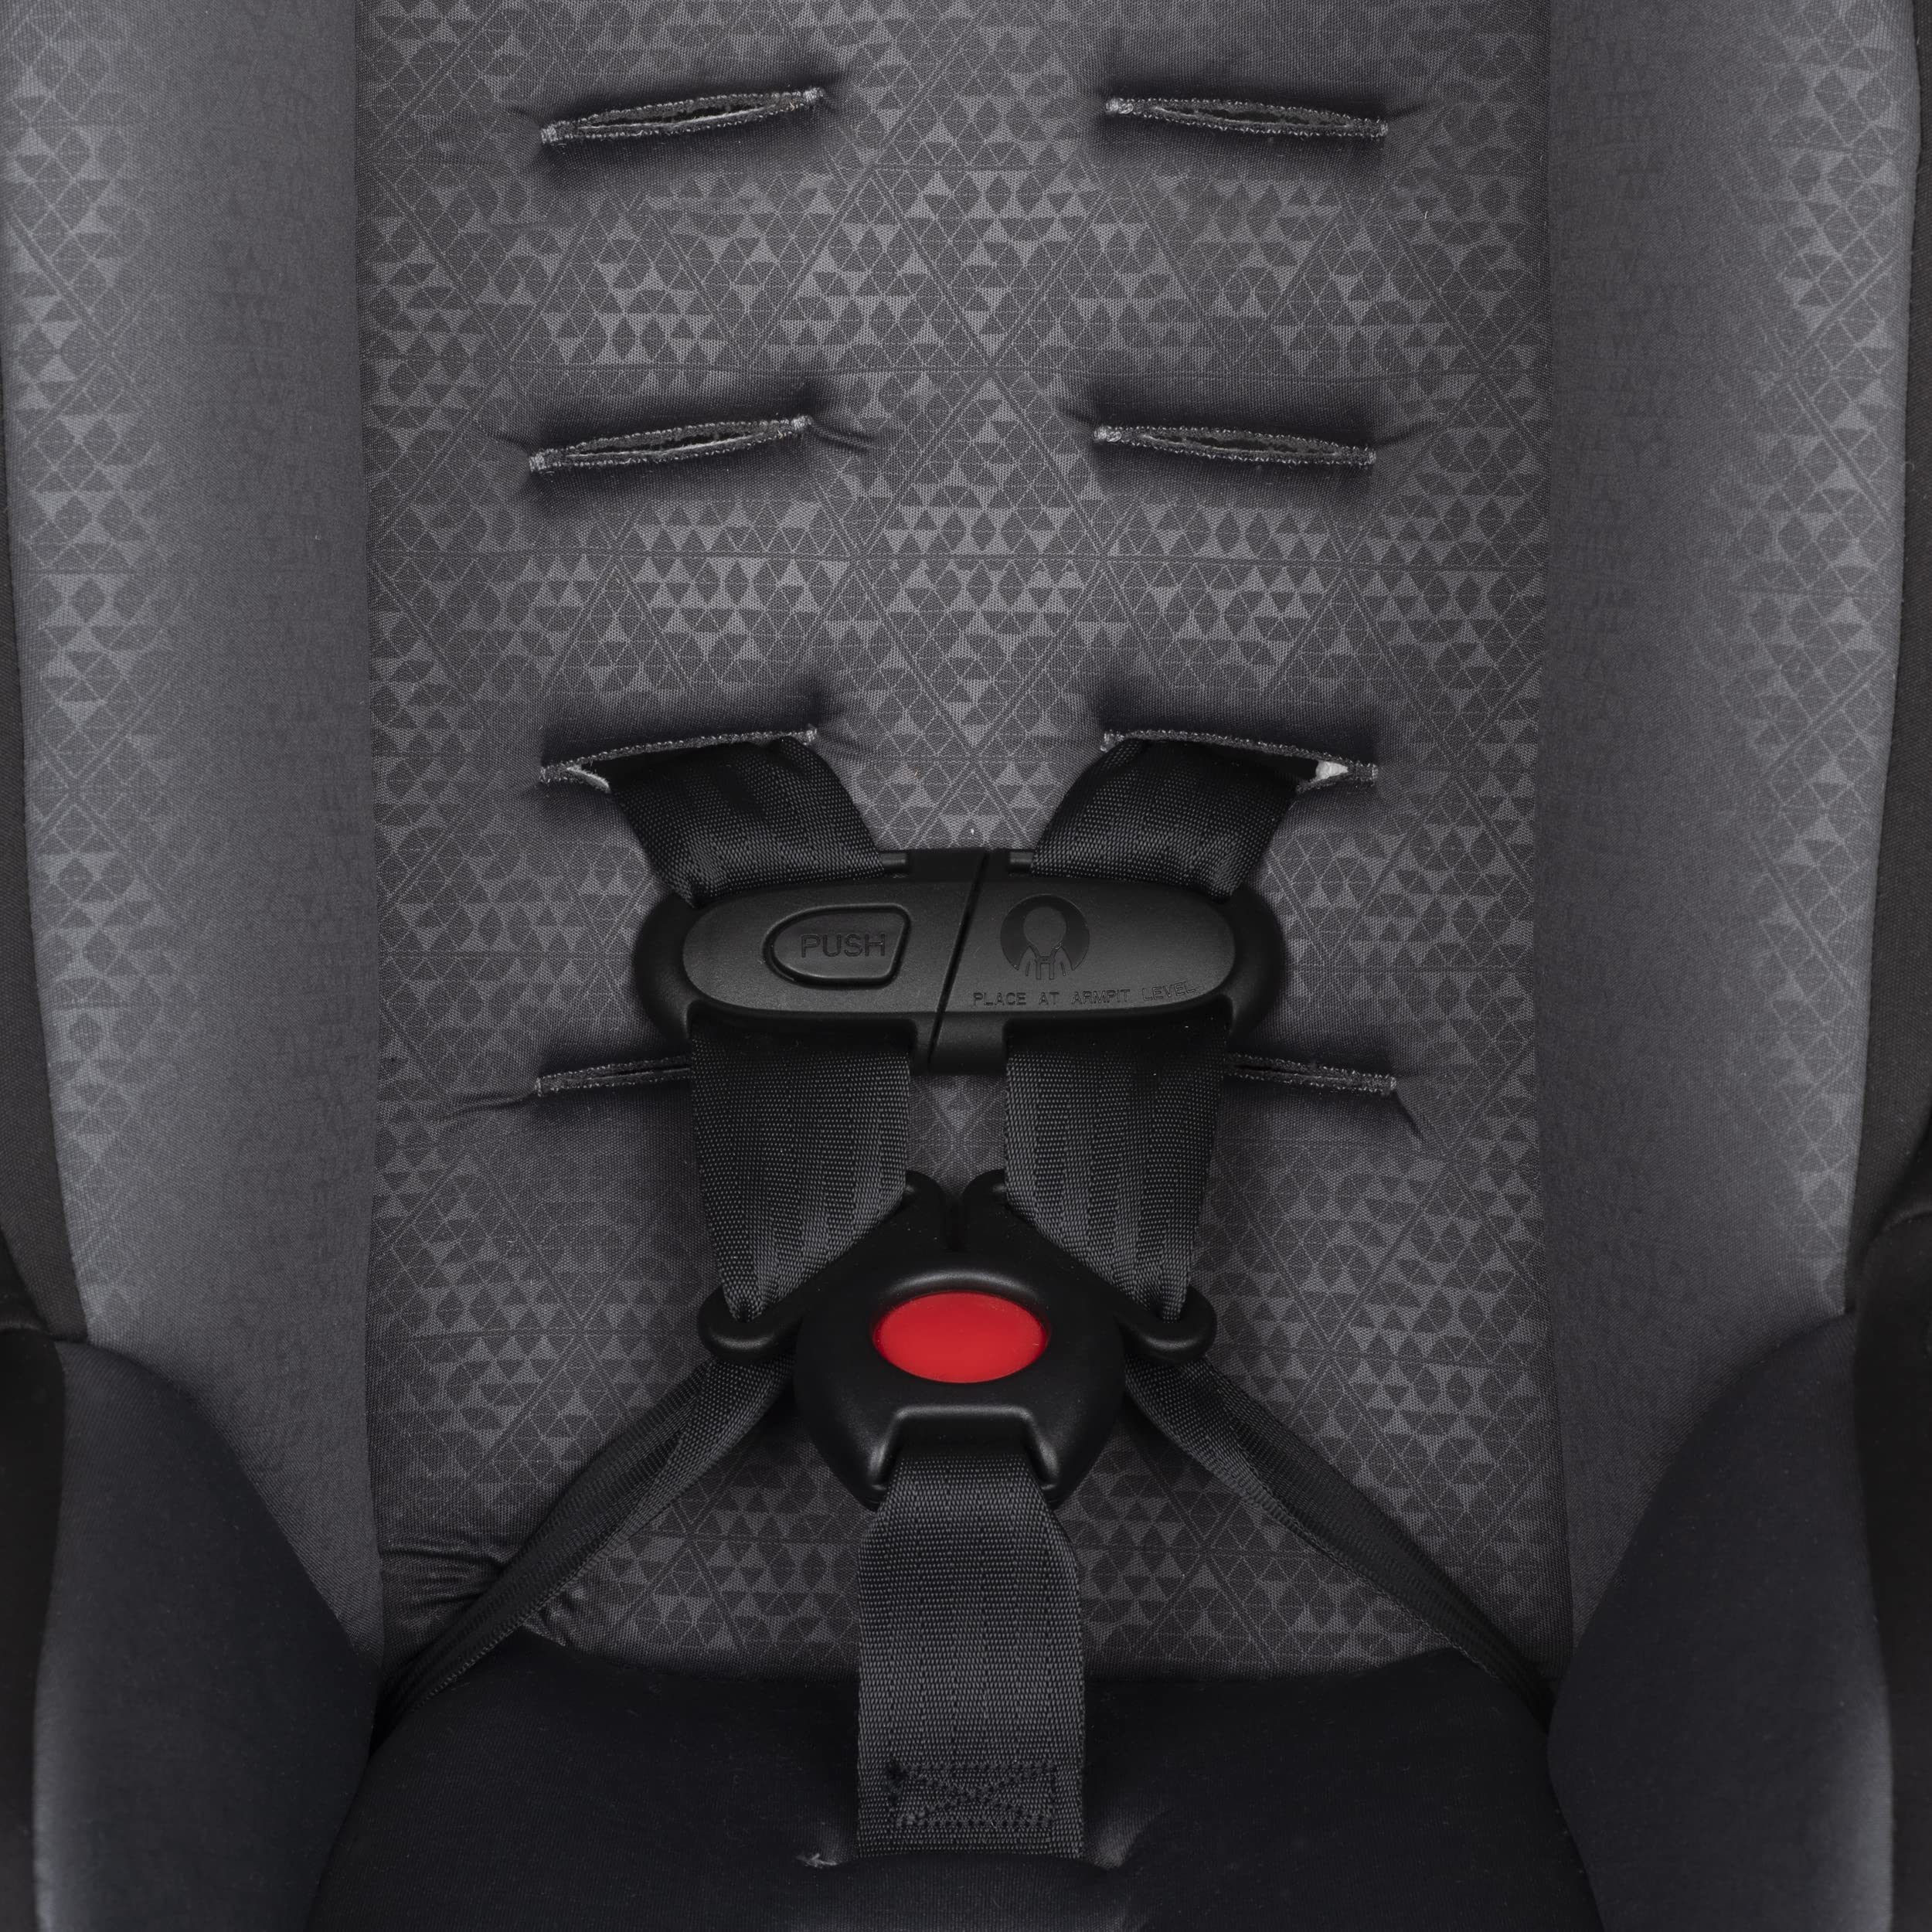 Evenflo LiteMax 35 Infant Car Seat, Lightweight, Extended Use, Belt Lock-Off, Ergonomic Handle